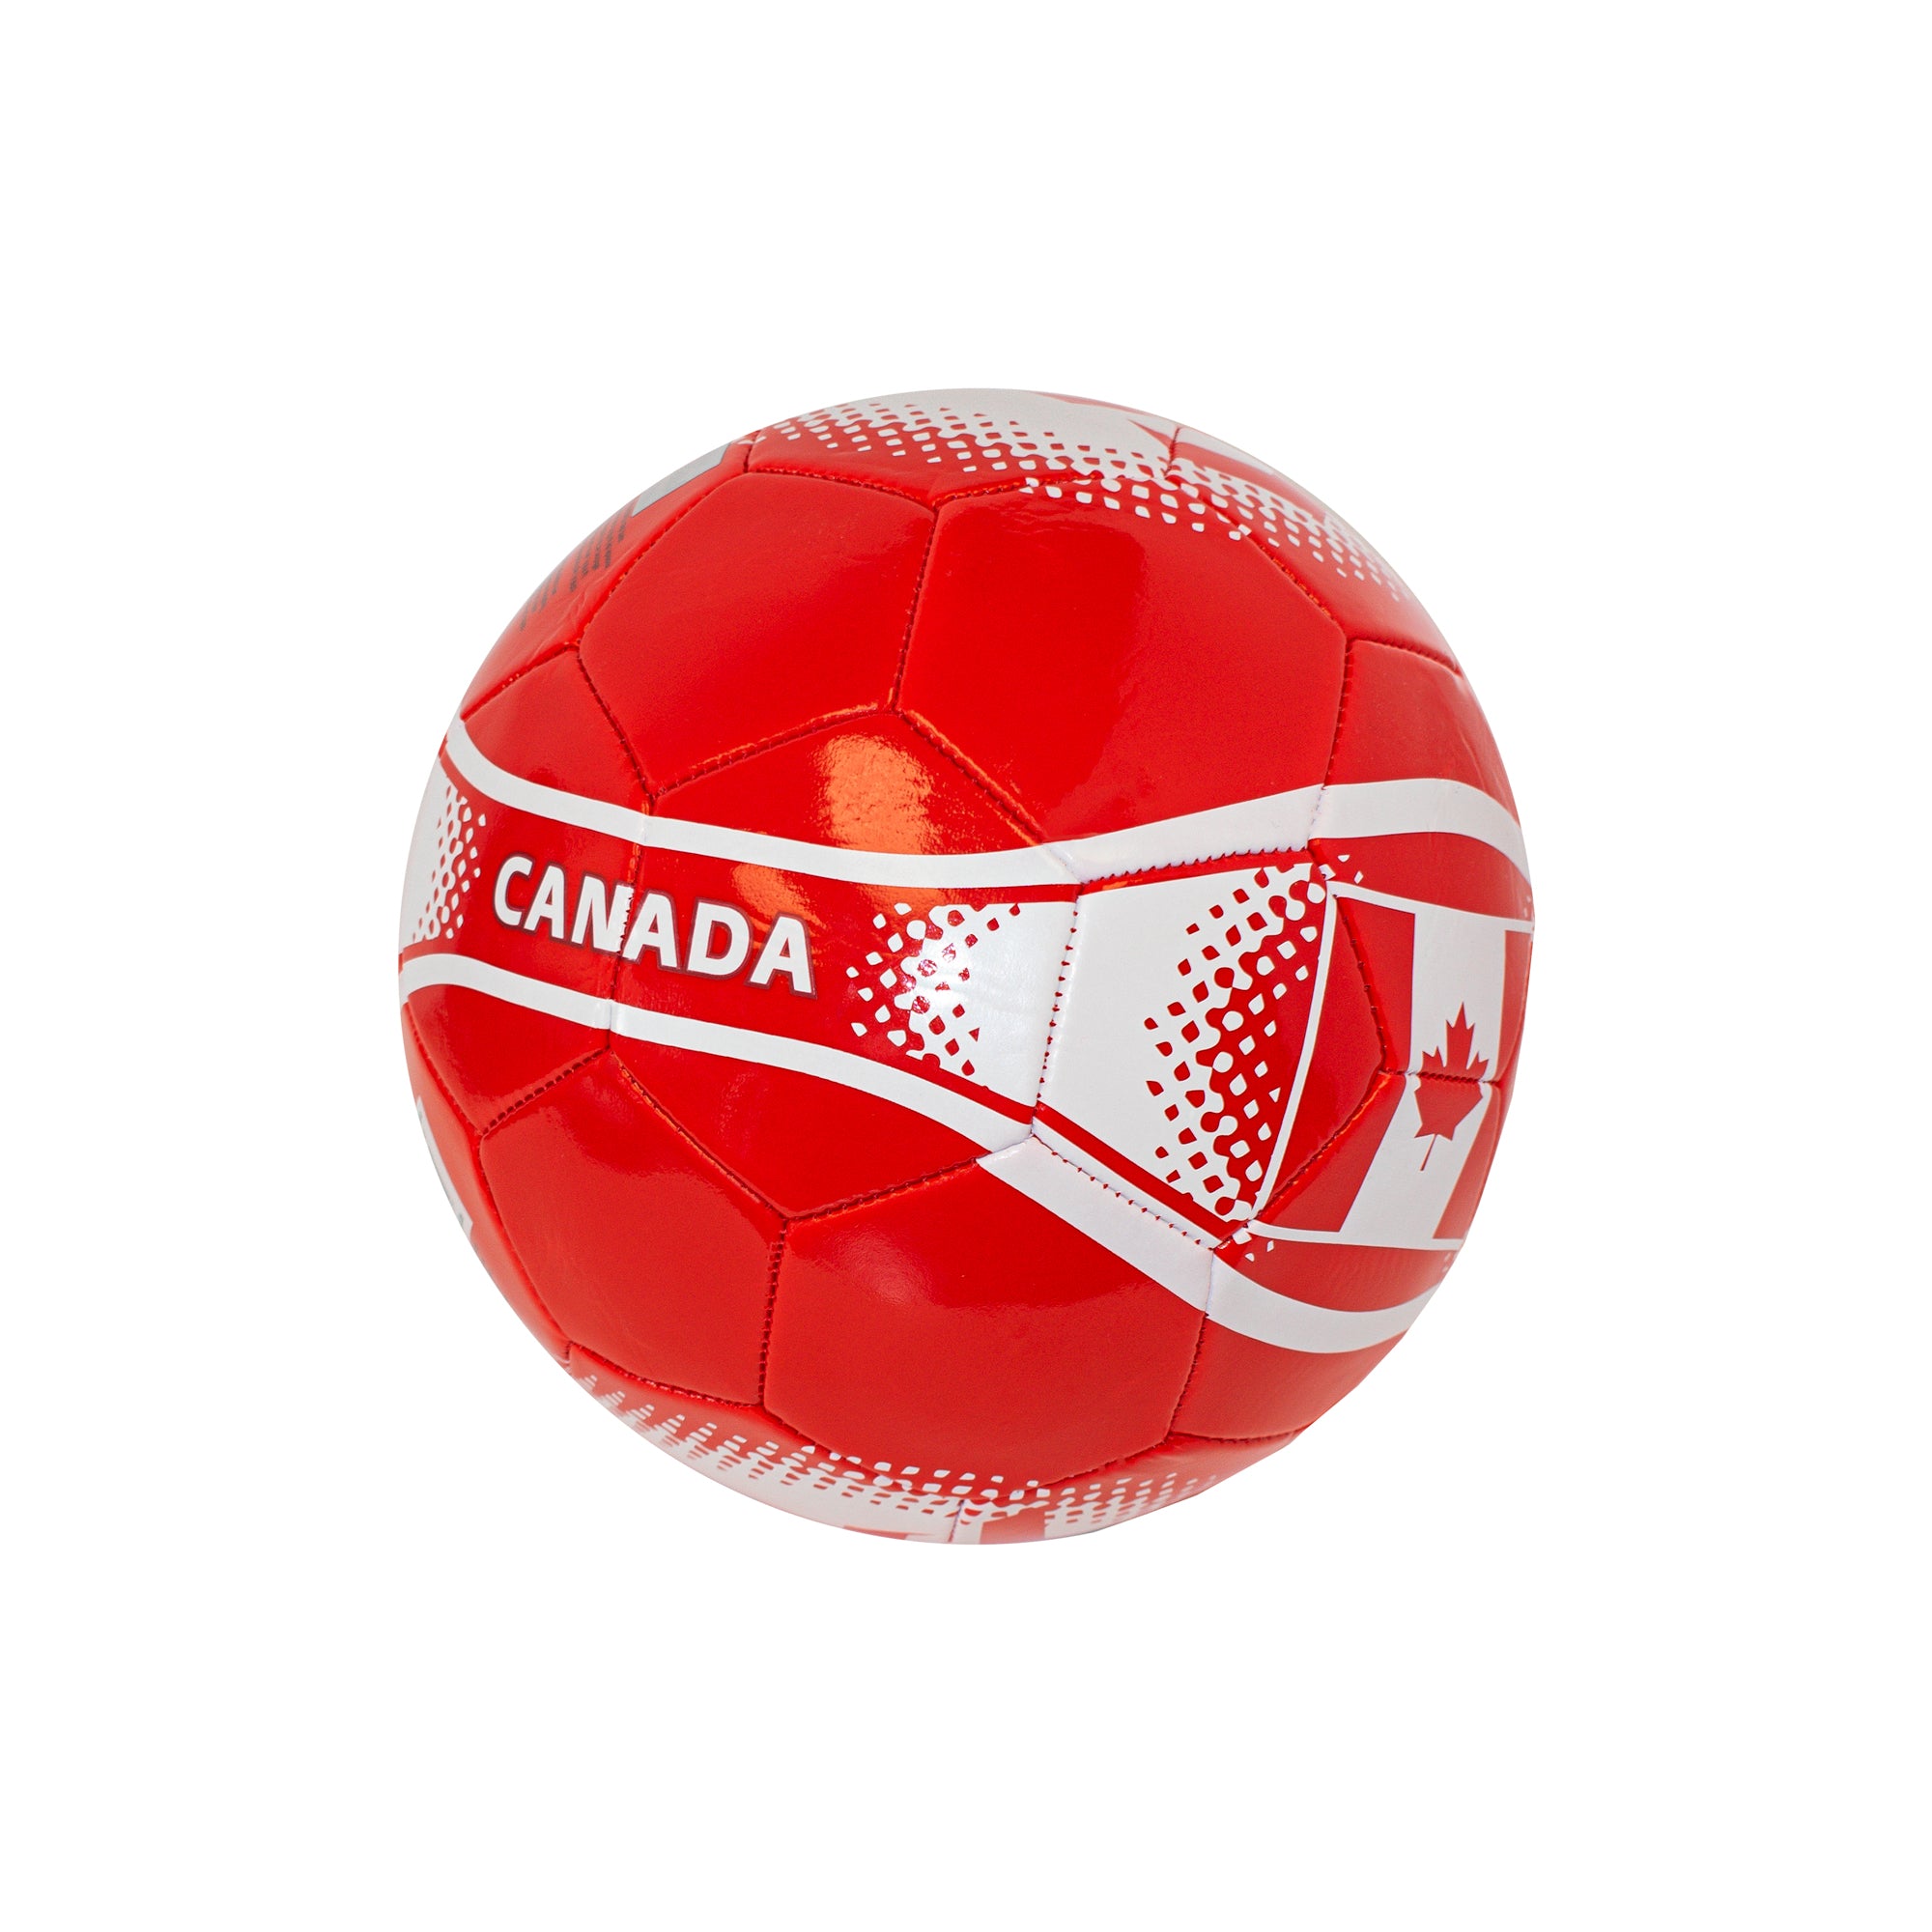 canada-soccerball-wc-image-4.jpg